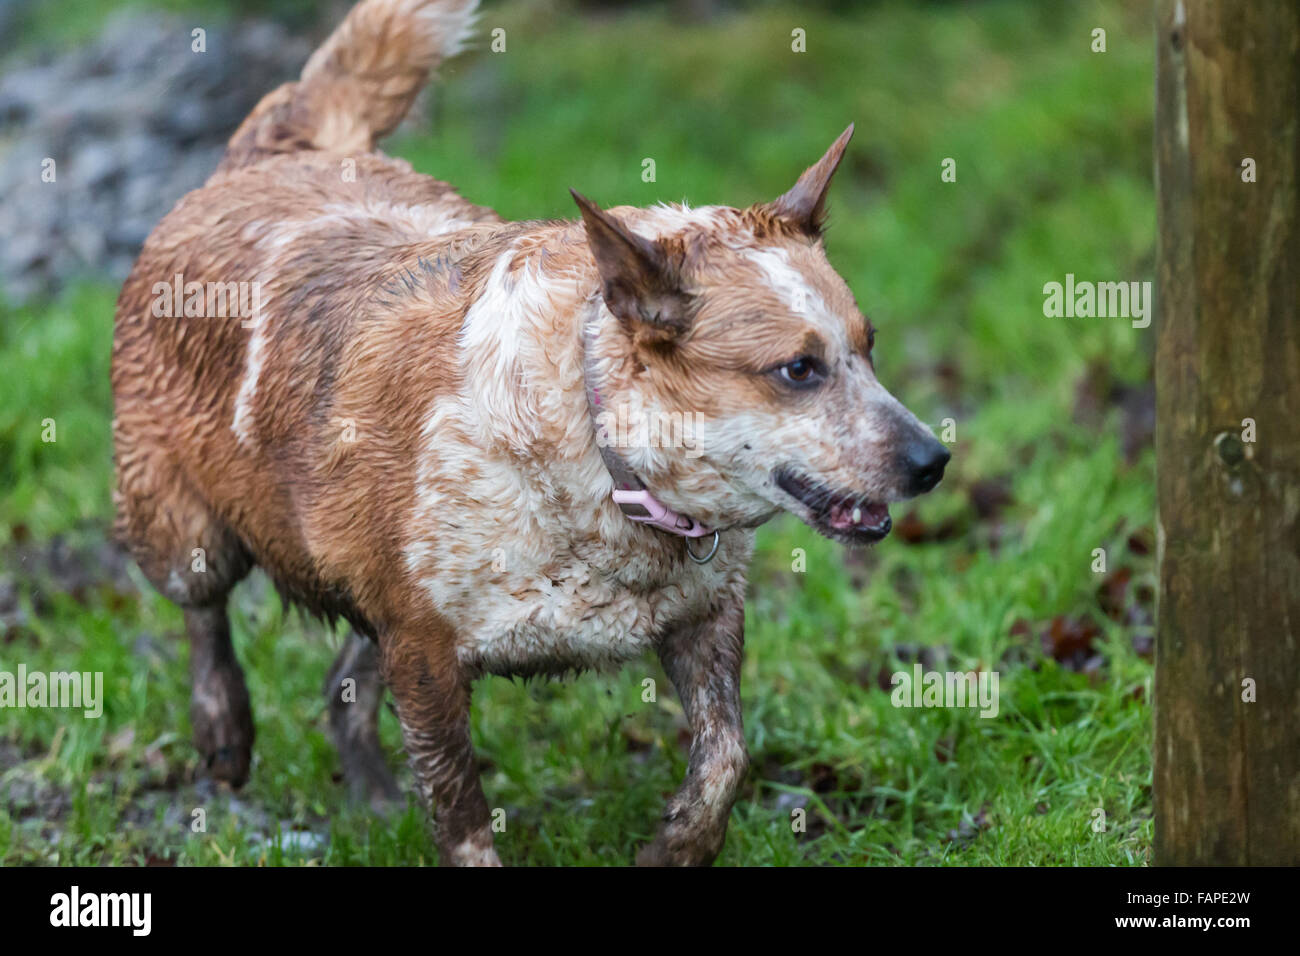 wet muddy working farm dog Stock Photo